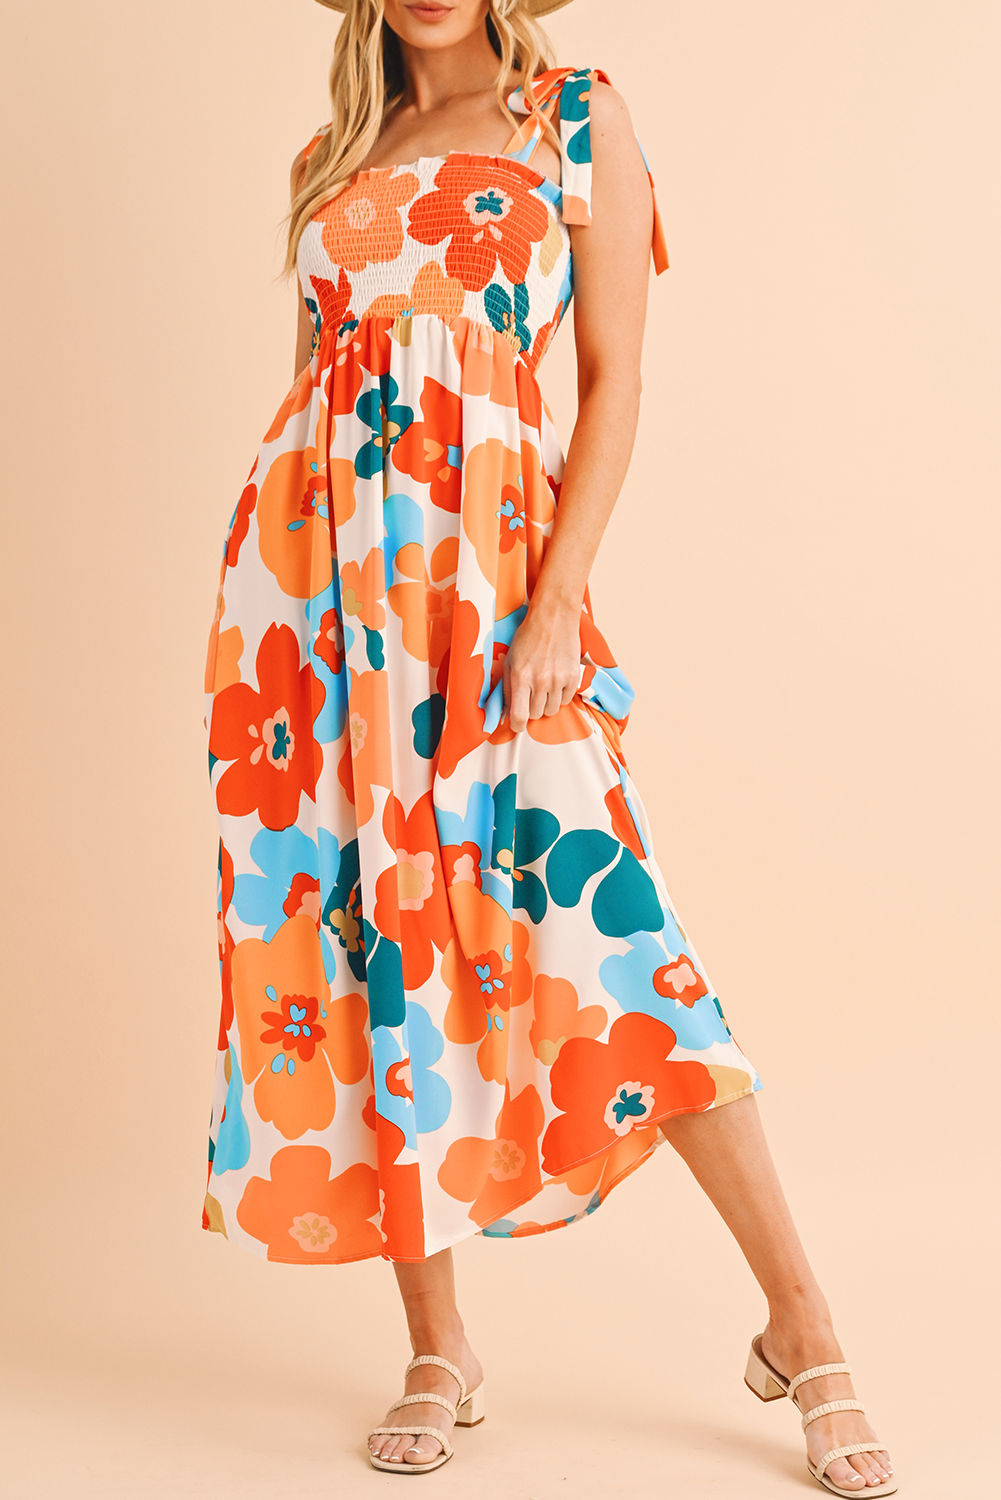 Shewin Wholesale Stores Orange 60s Floral Printed Shoulder TIE Smocked Maxi Dress